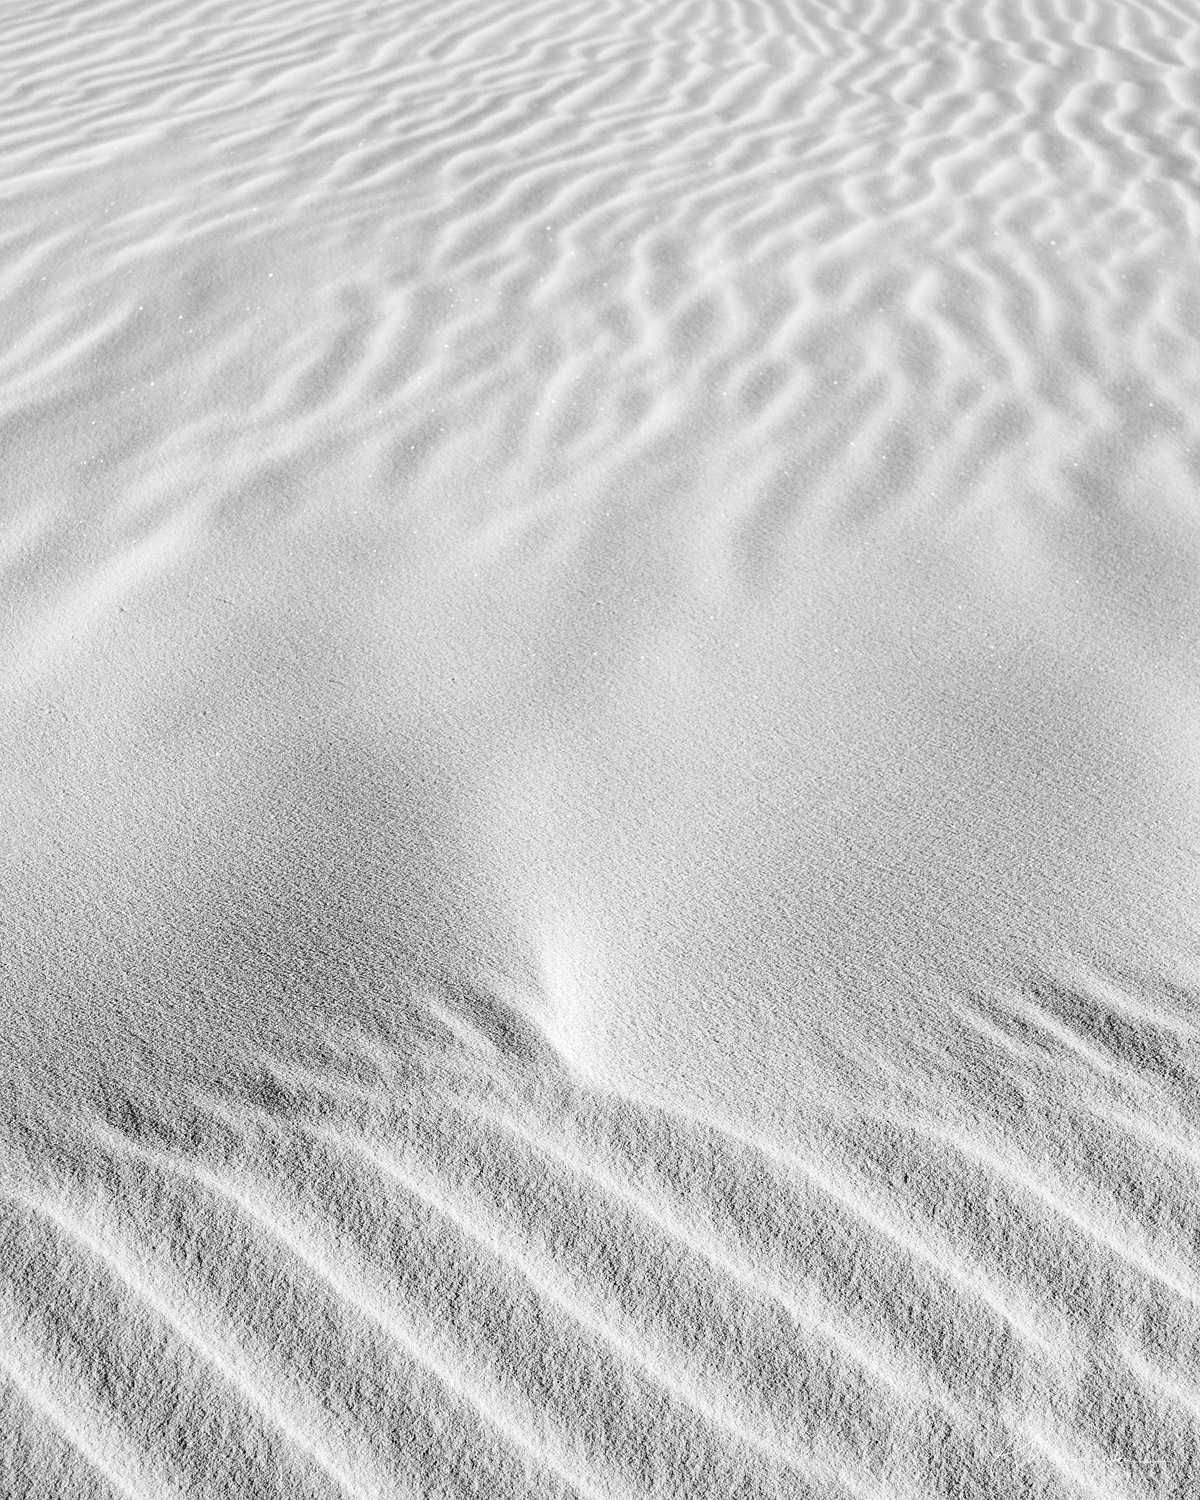 Sand patterns at White Sands National Park